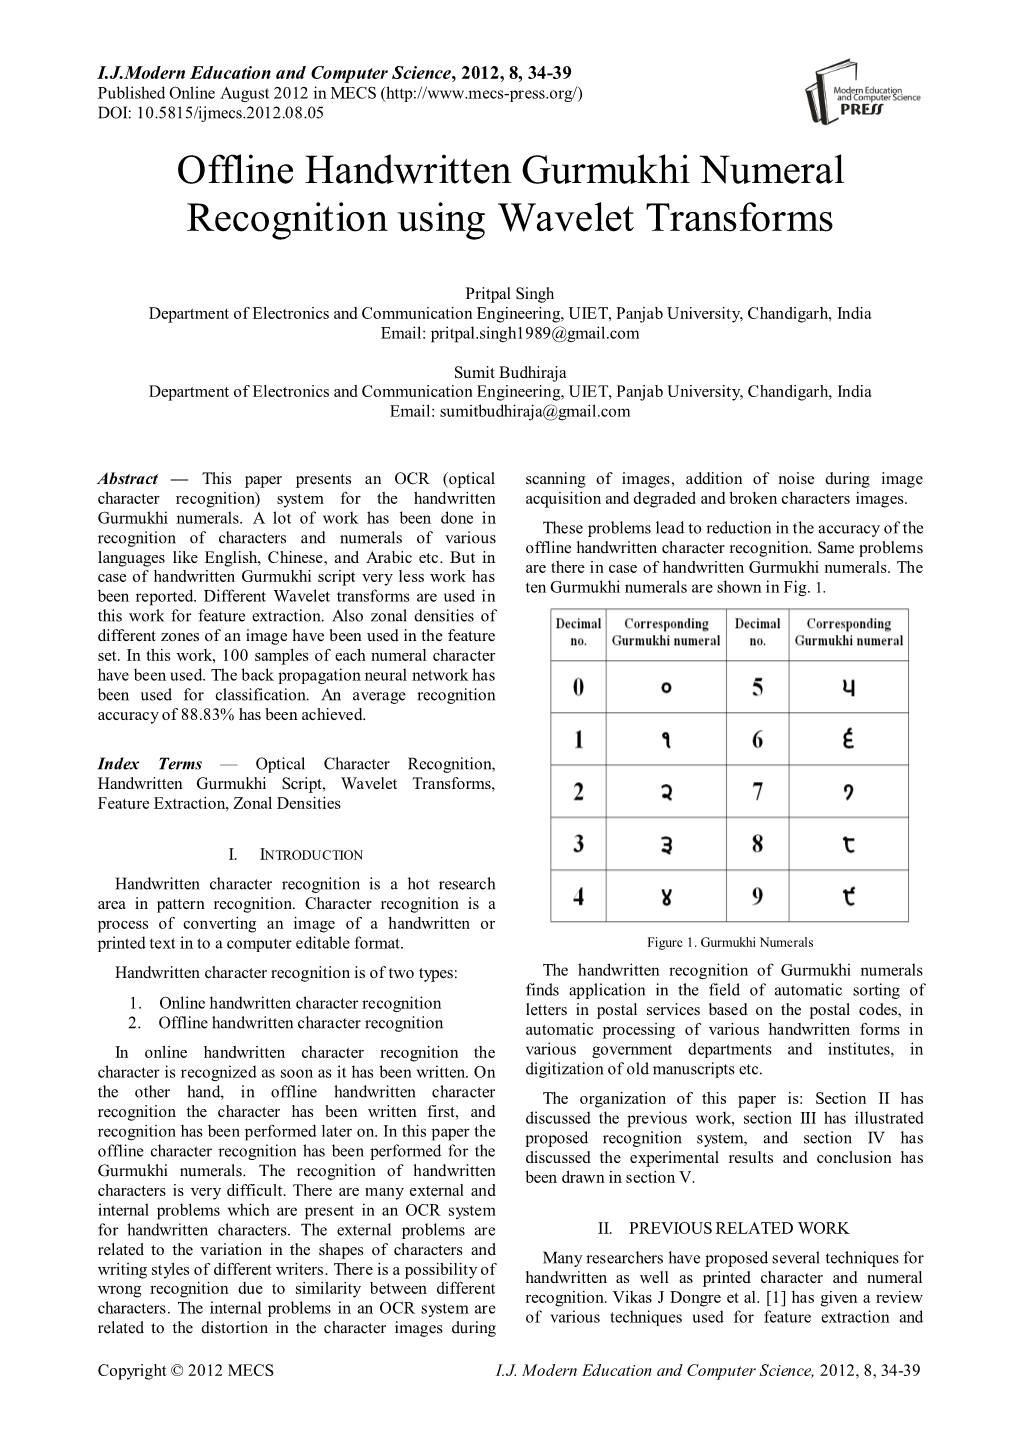 Offline Handwritten Gurmukhi Numeral Recognition Using Wavelet Transforms